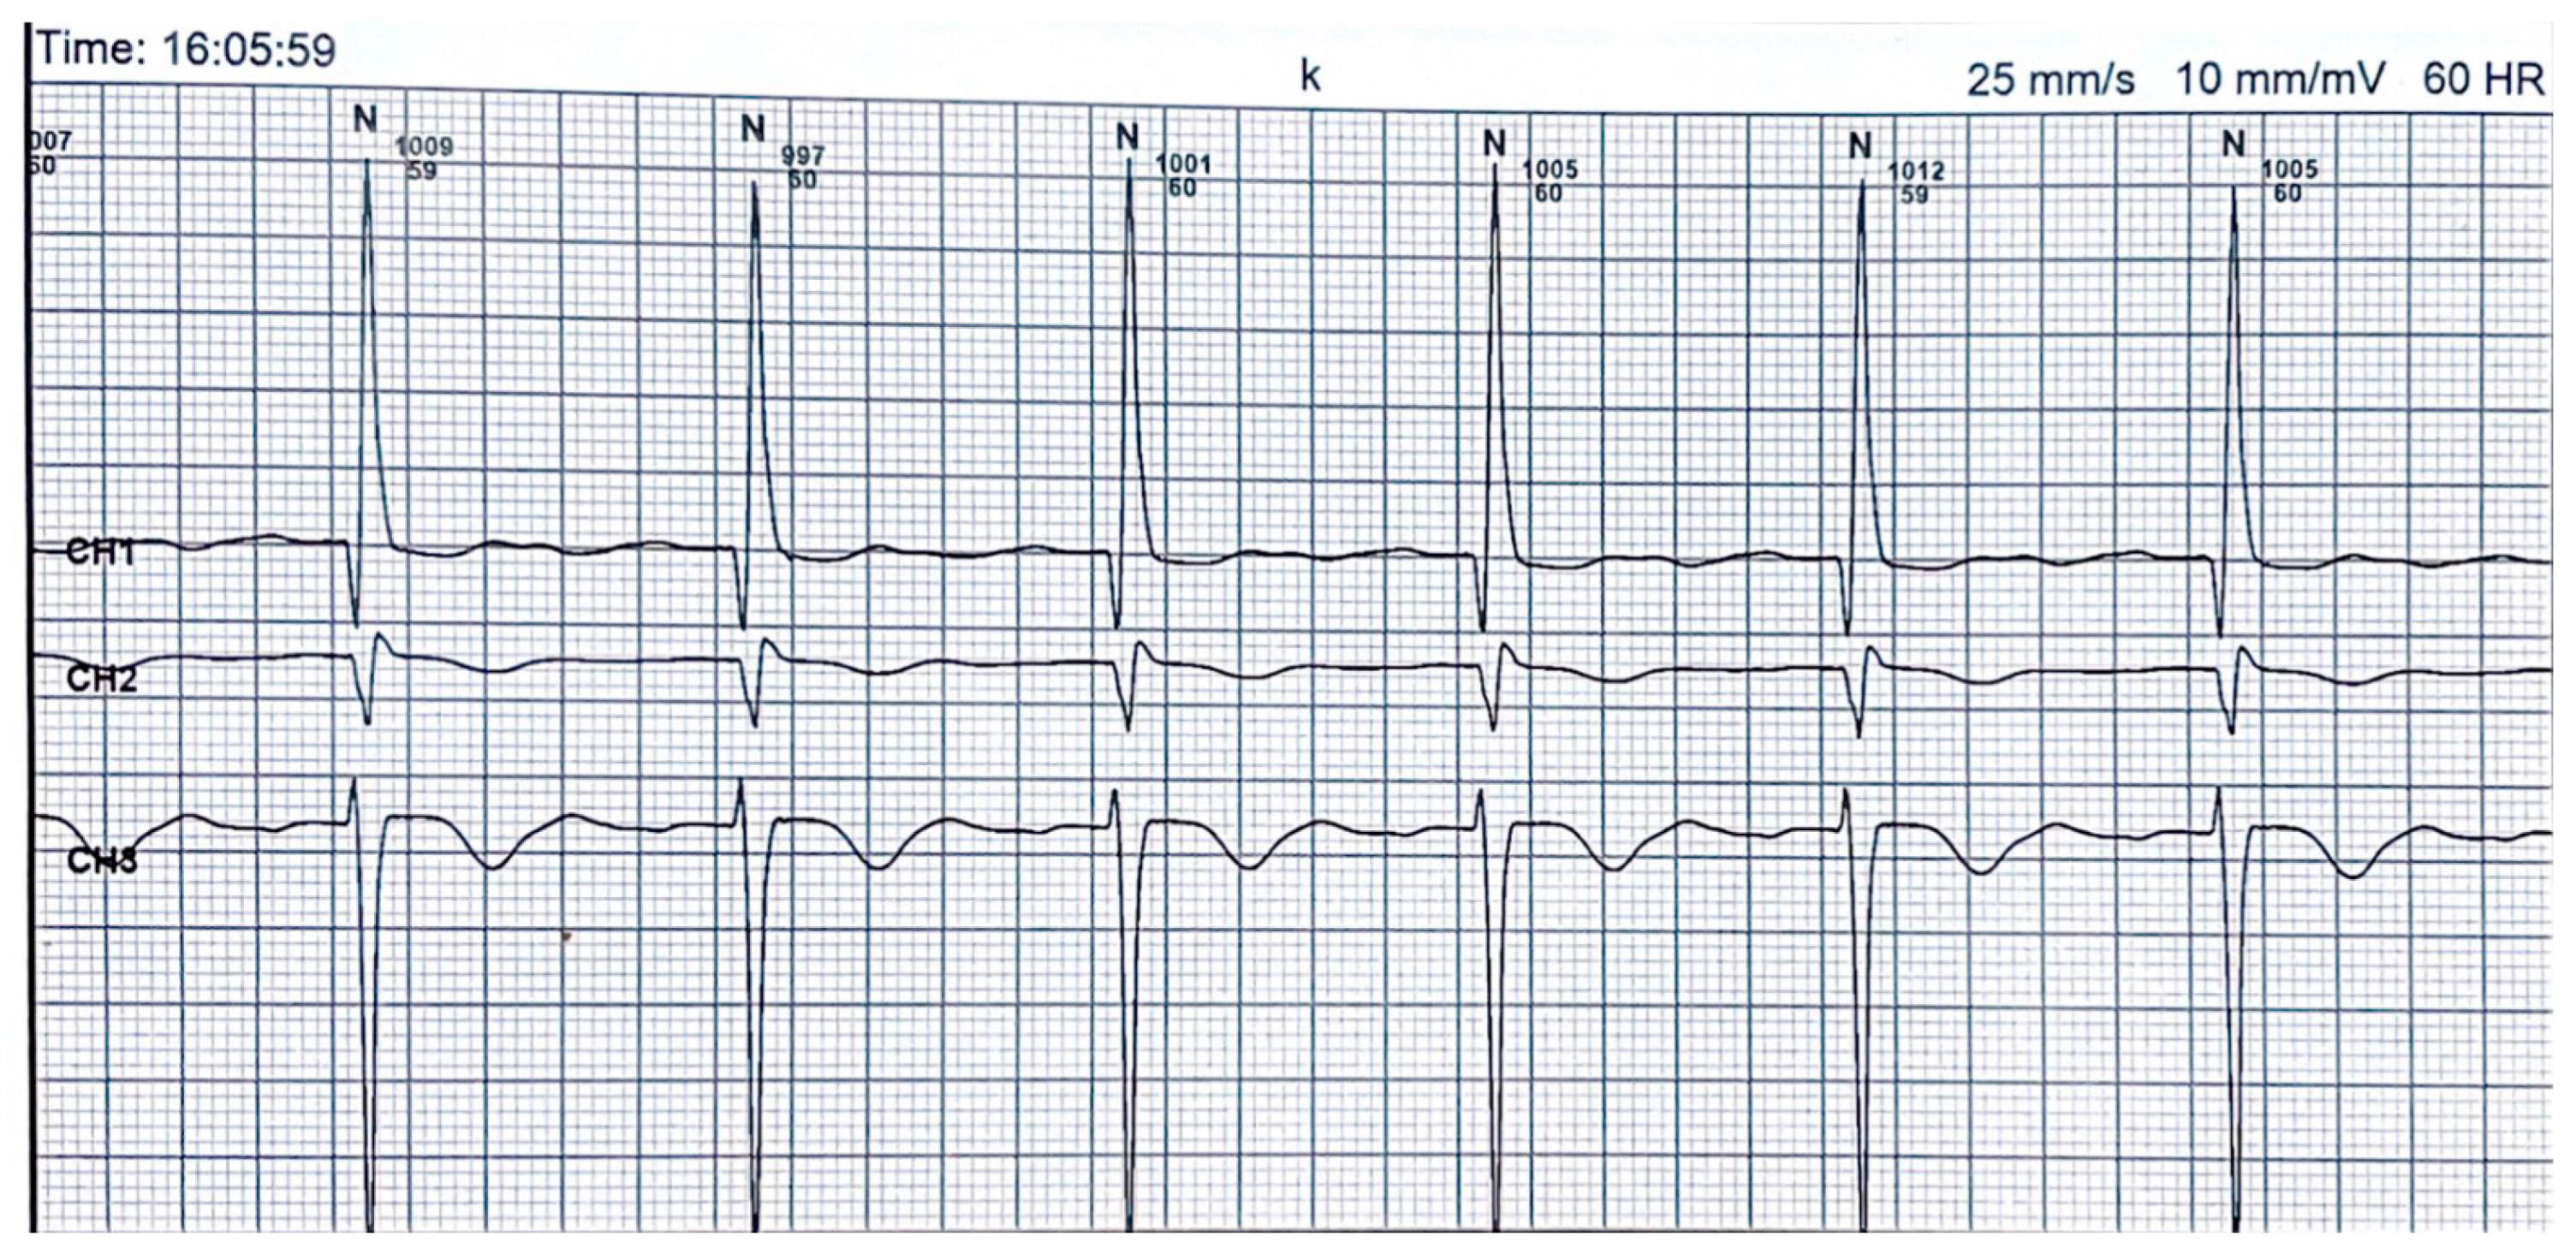 24h ECG Holter Monitor £170, London Cardiology Clinics